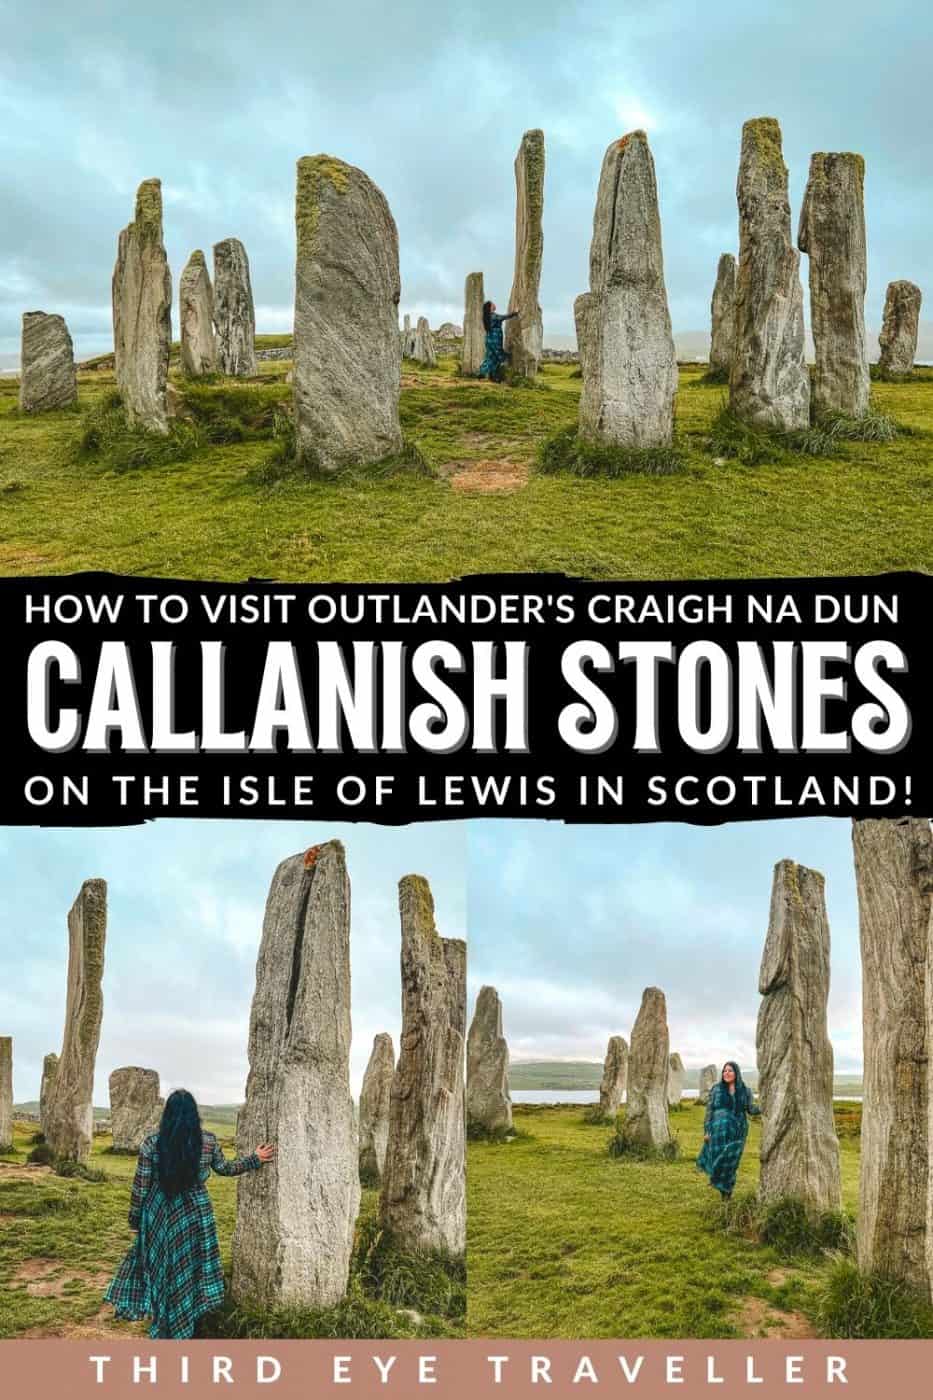 How to visit the Callanish Stones Isle of Lewis Scotland